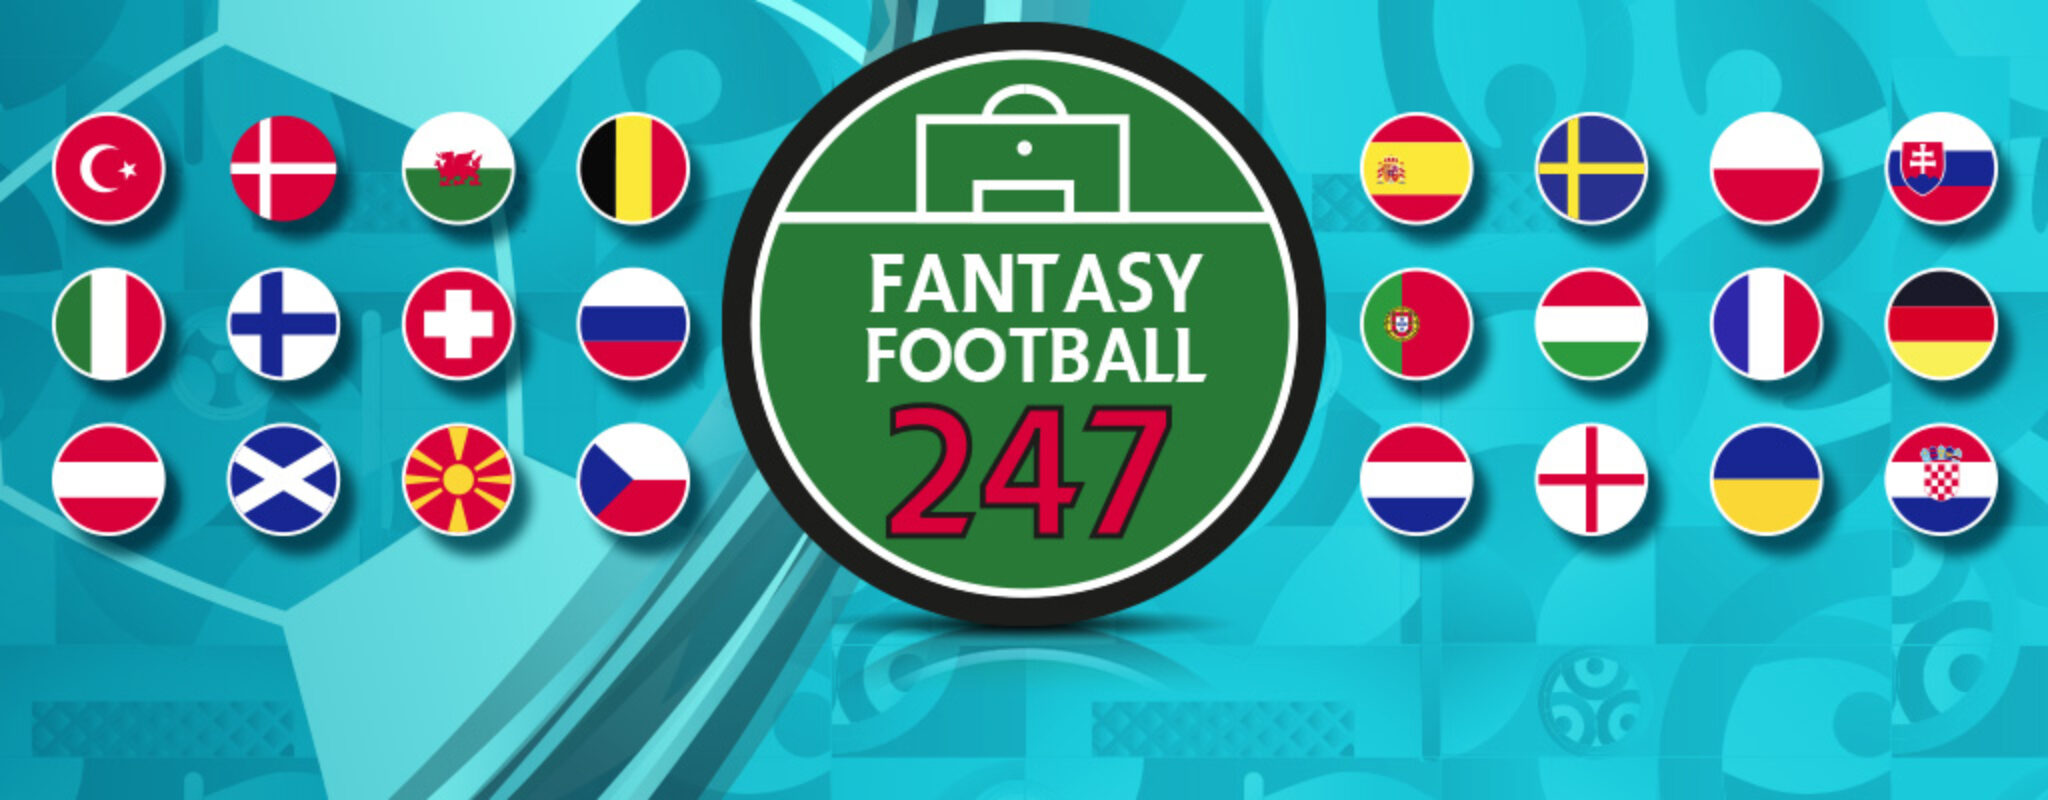 Euro fantasy football